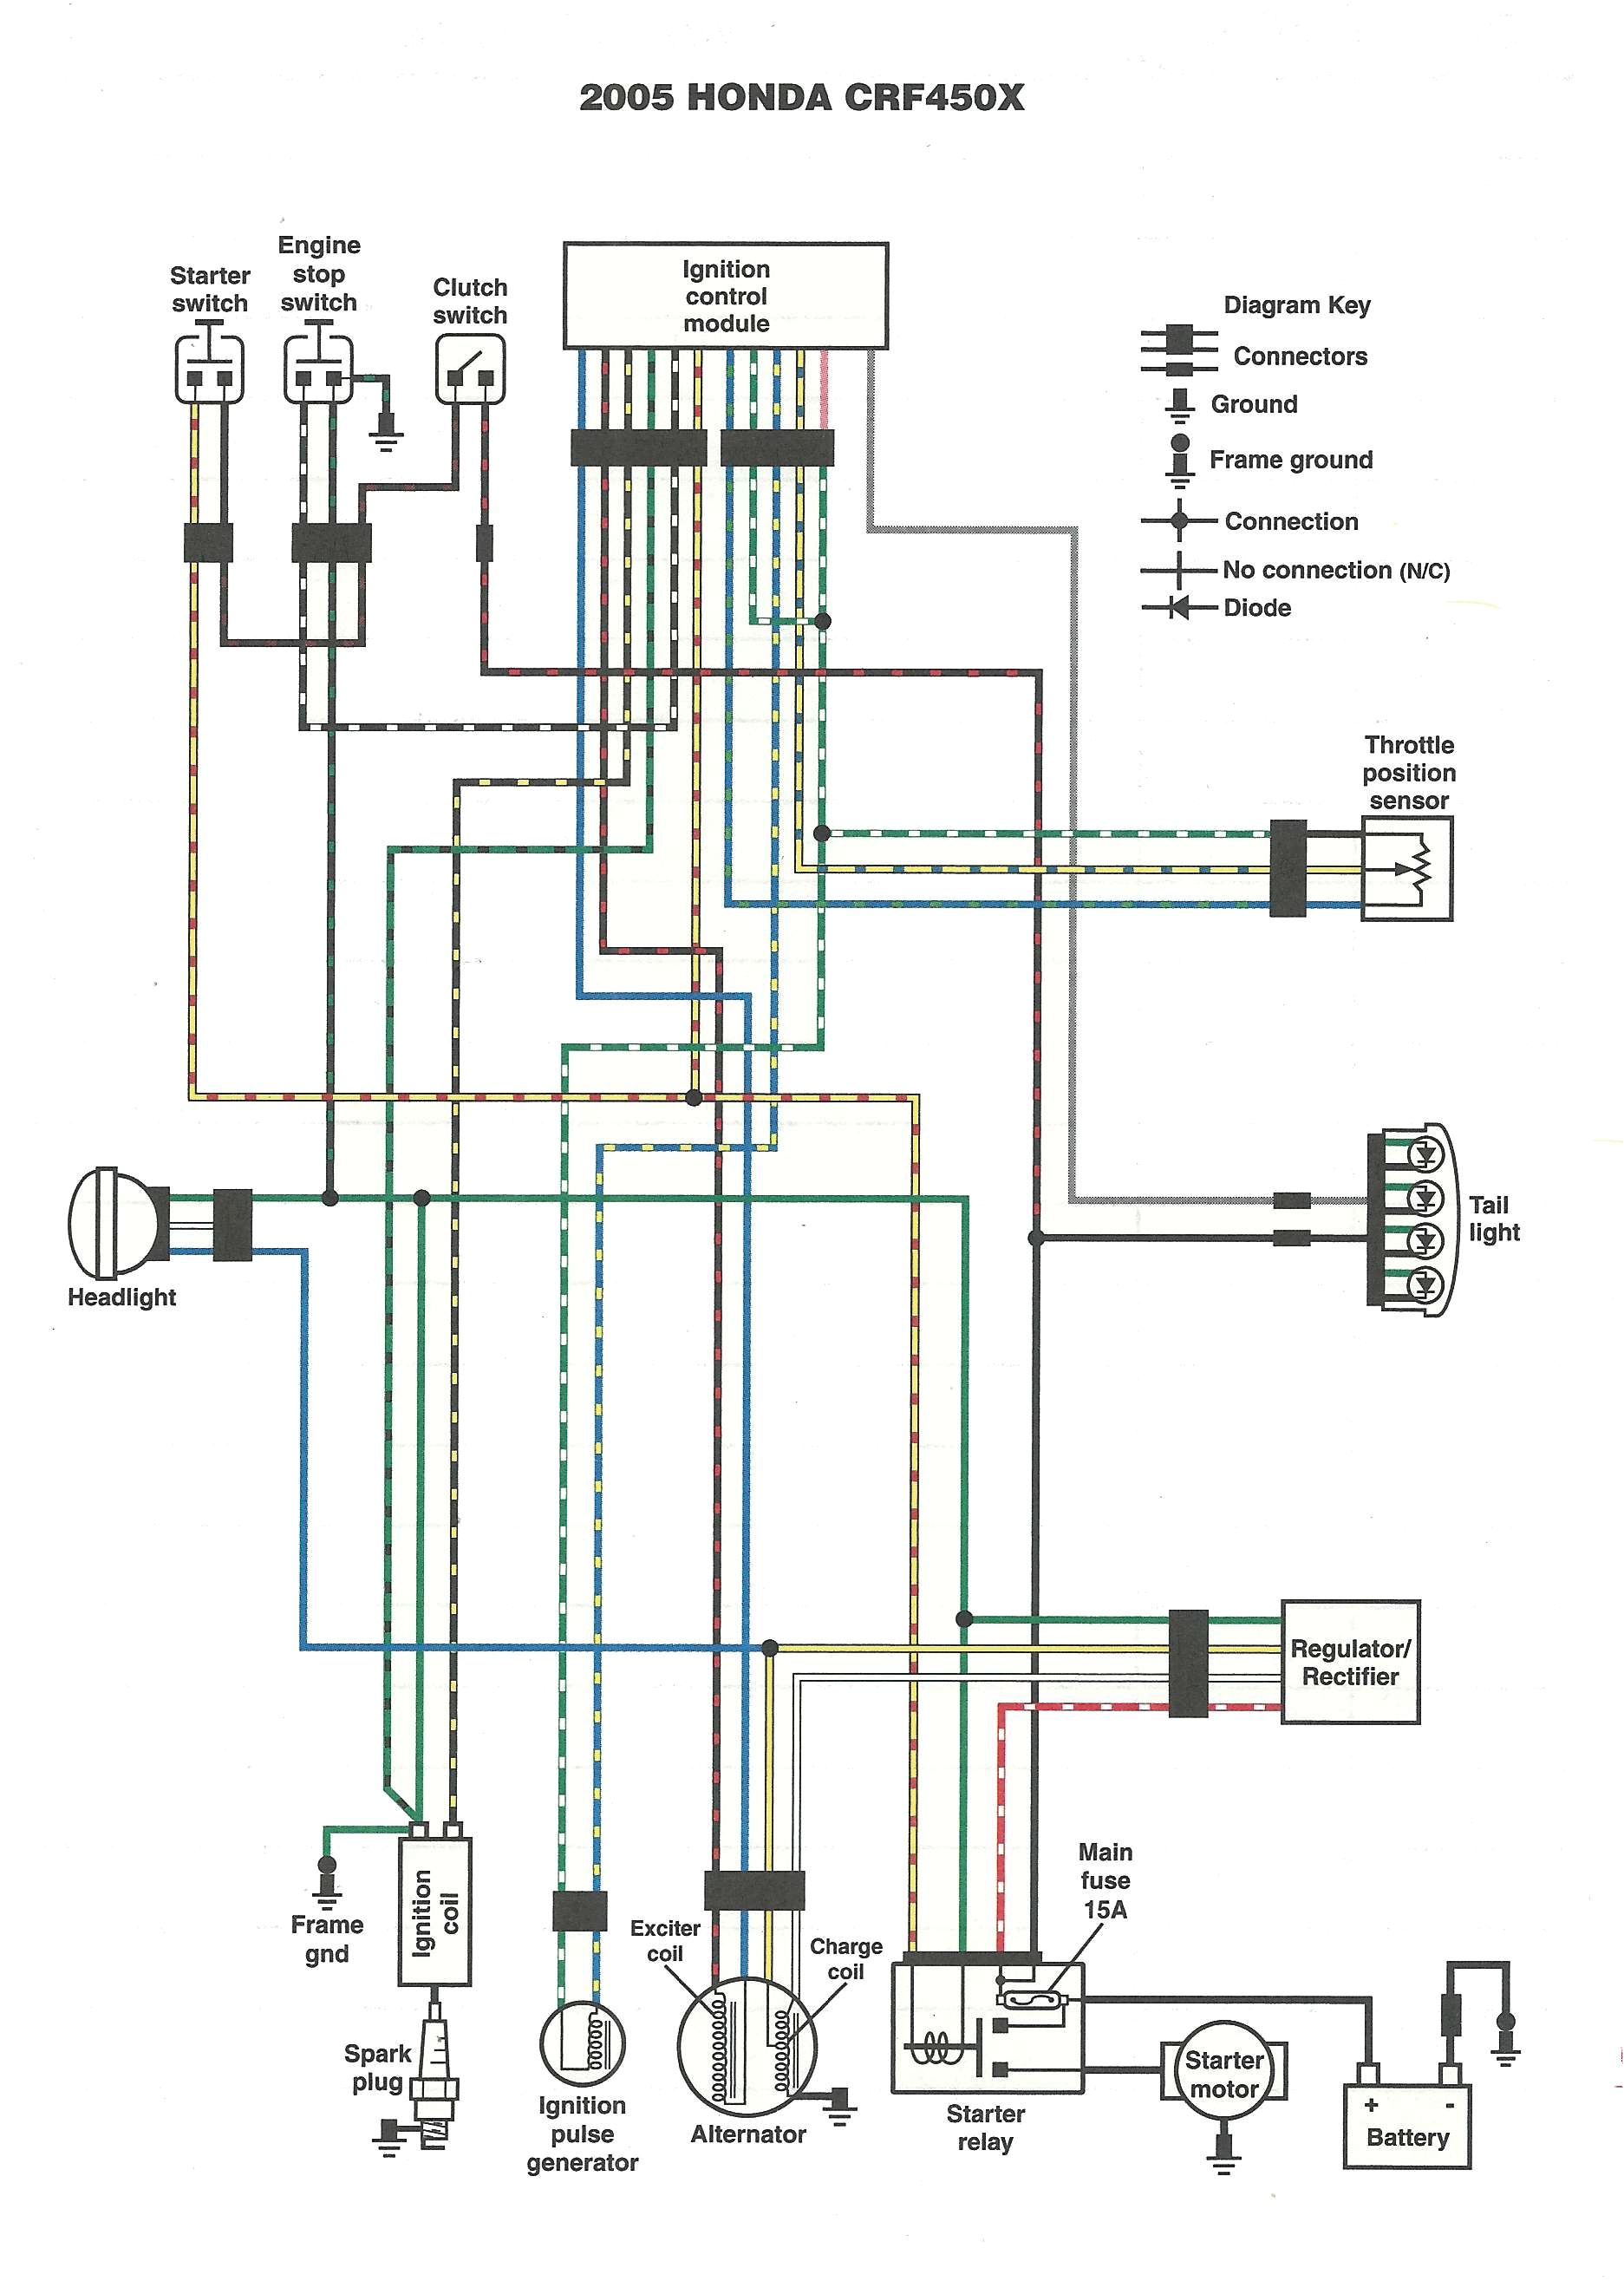 dan s motorcycle wiring diagrams honda motorcycle wiring diagram symbols honda motorcycle wiring